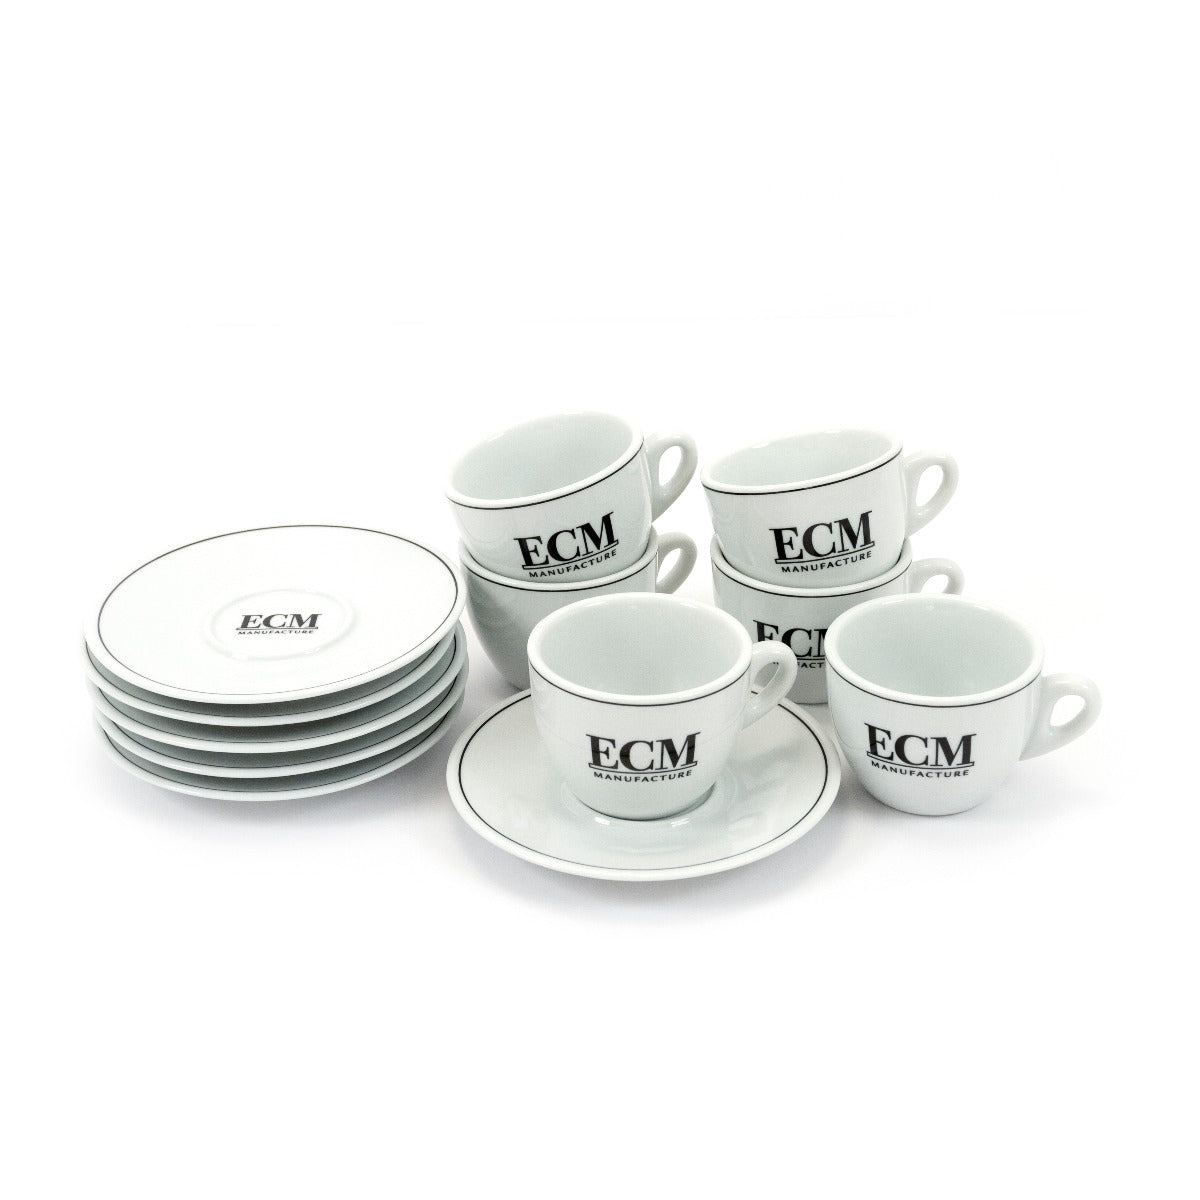 1 Set Colored Ceramic Coffee Cup Set Espresso Cups Porcelain